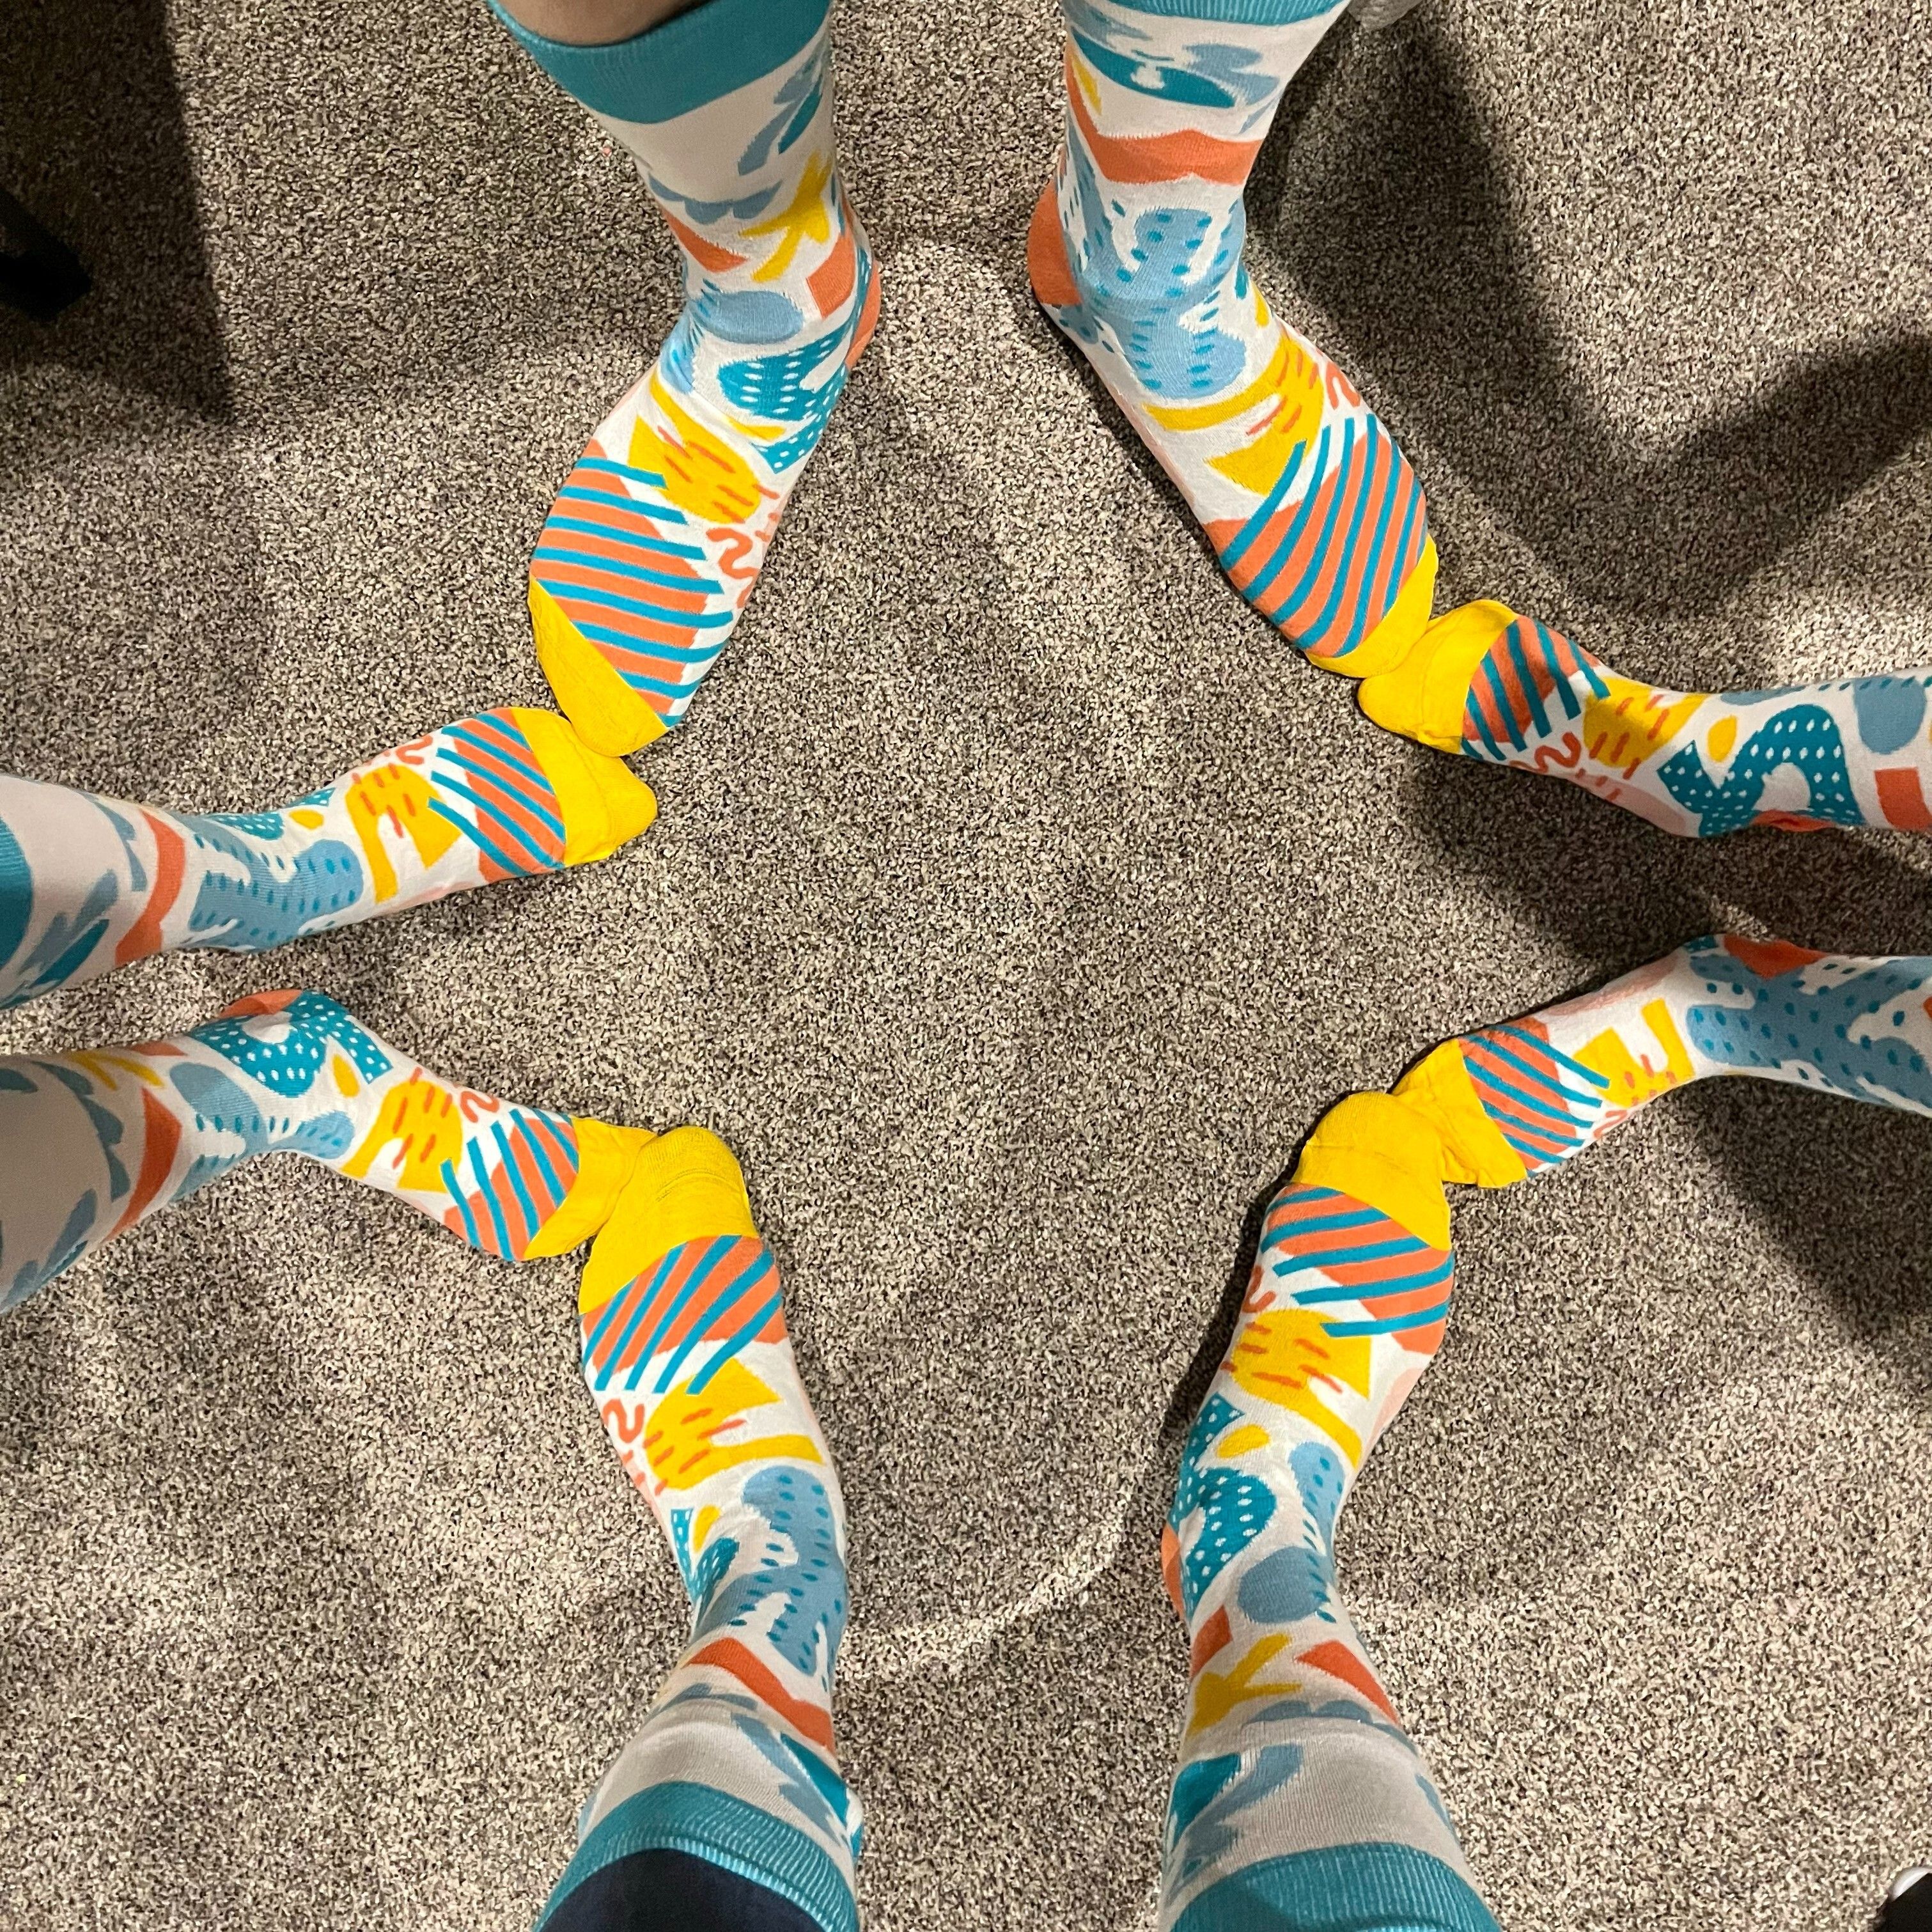 Feet wearing Cliniko branded socks posed in the shape of a star